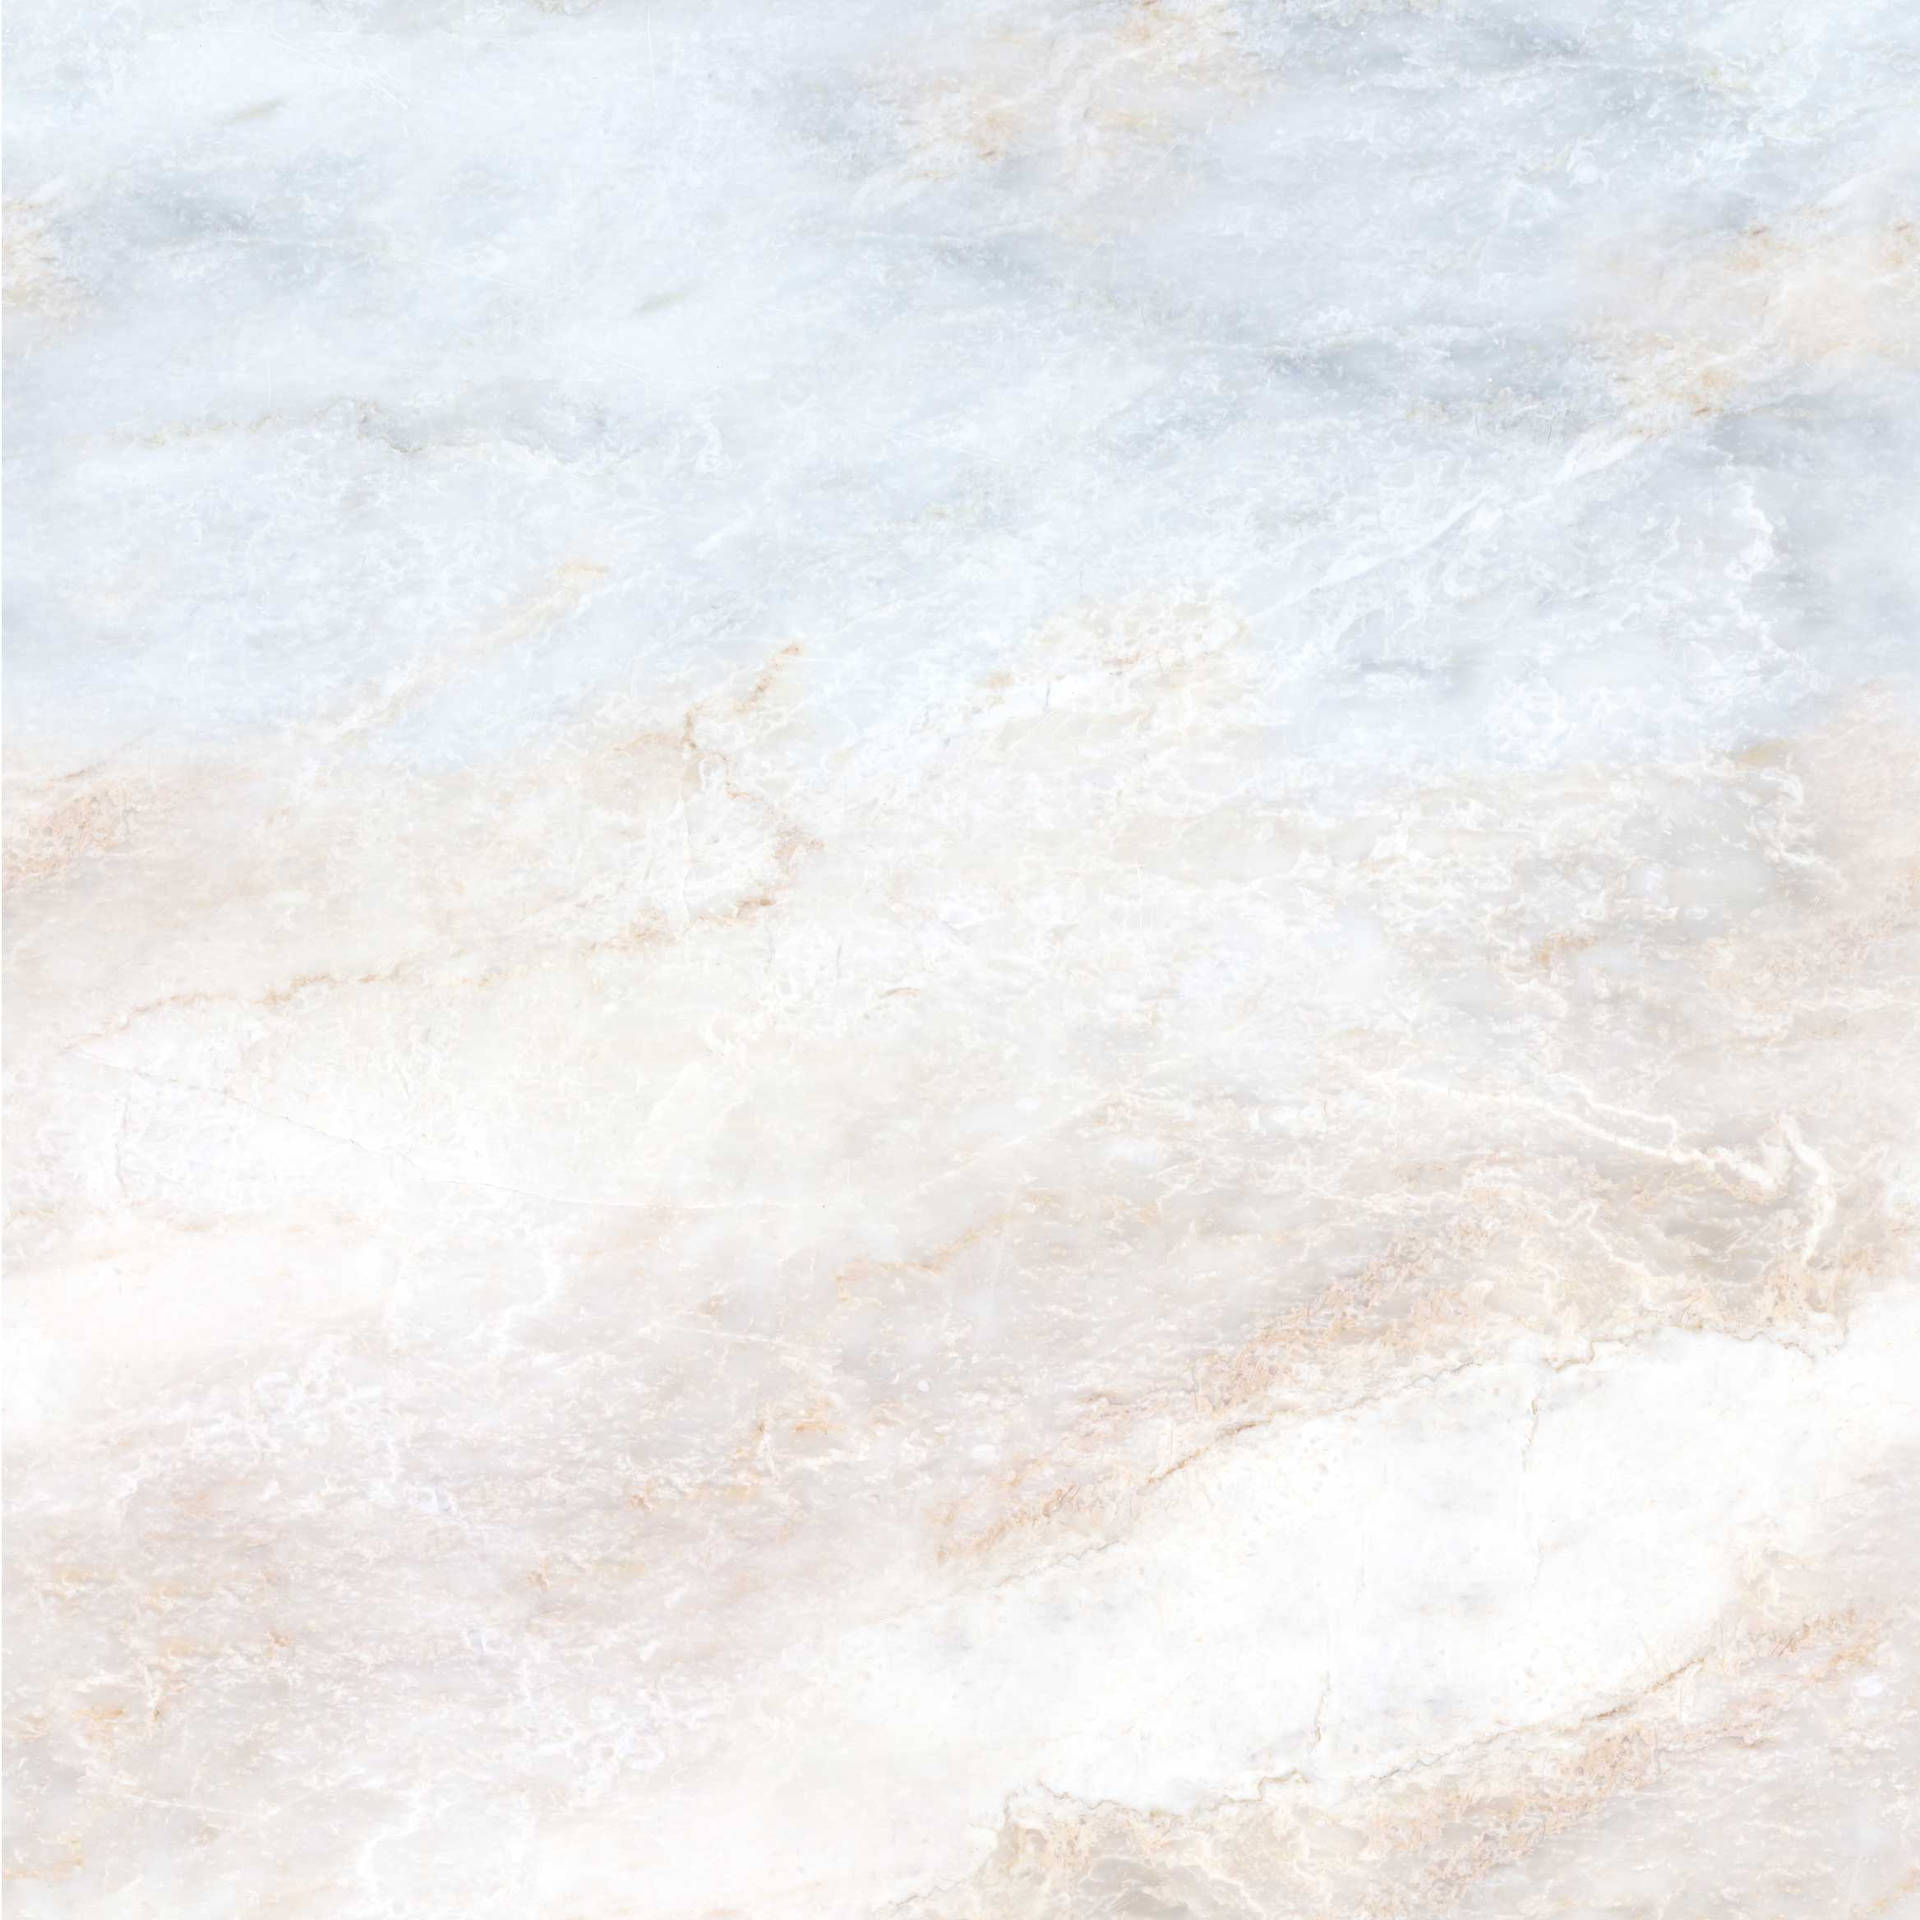 Marble 2336X2336 wallpaper